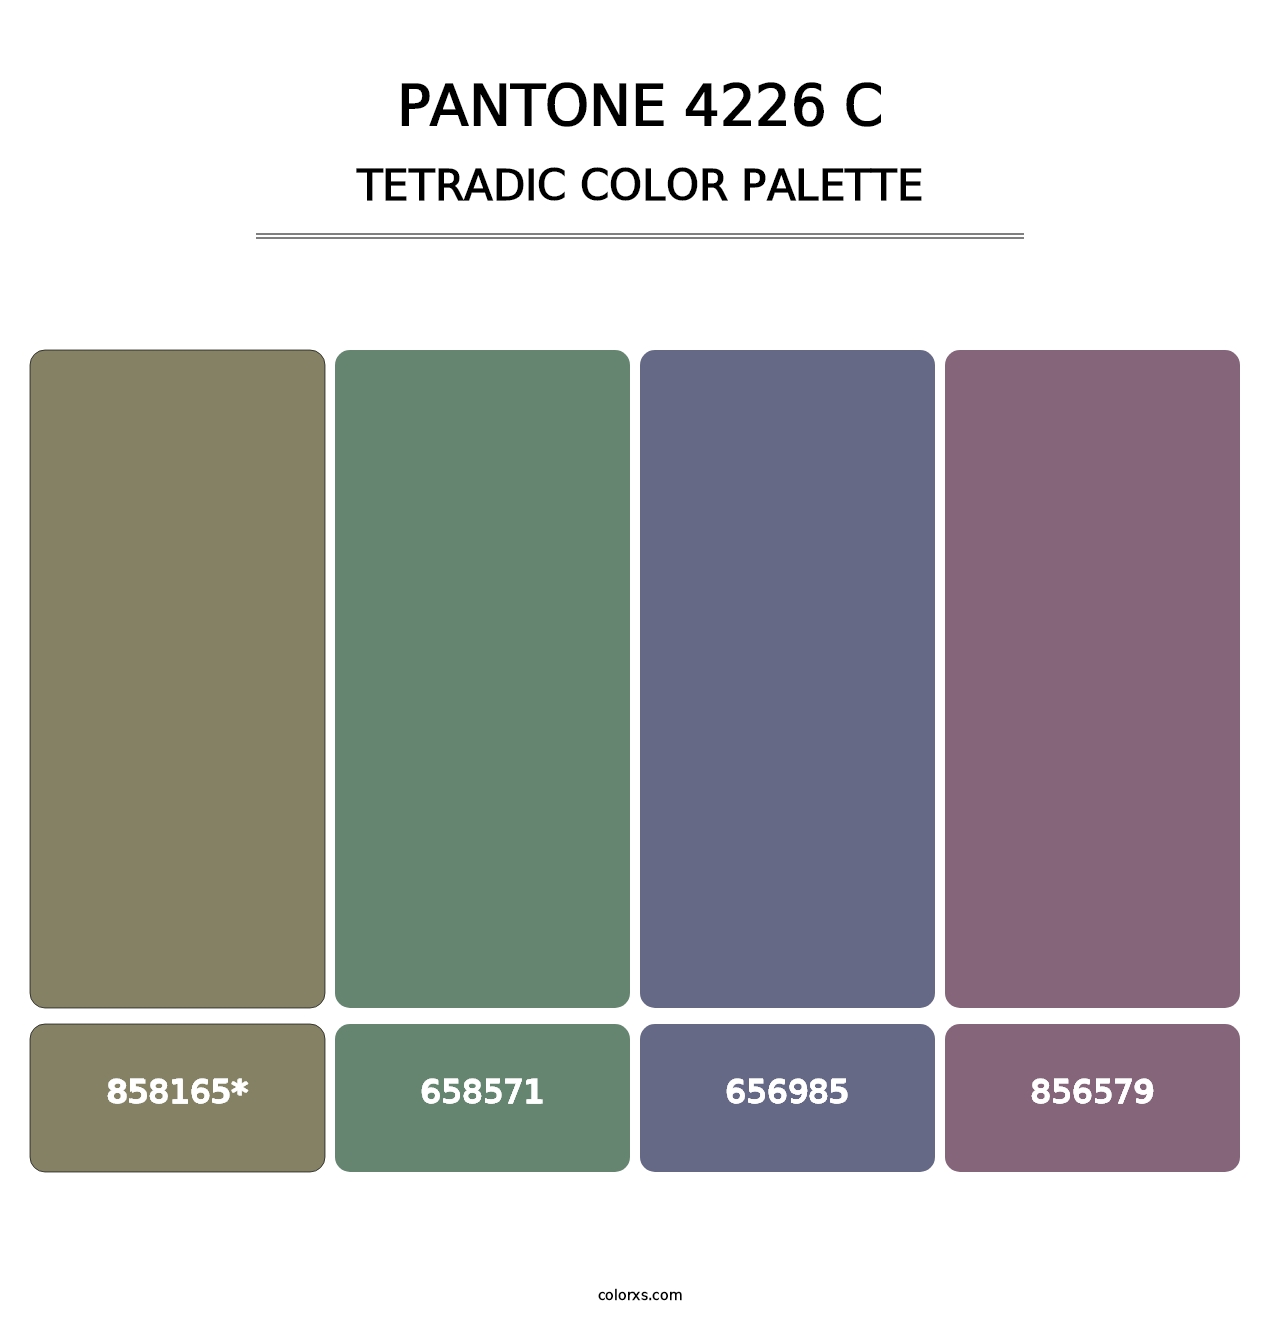 PANTONE 4226 C - Tetradic Color Palette